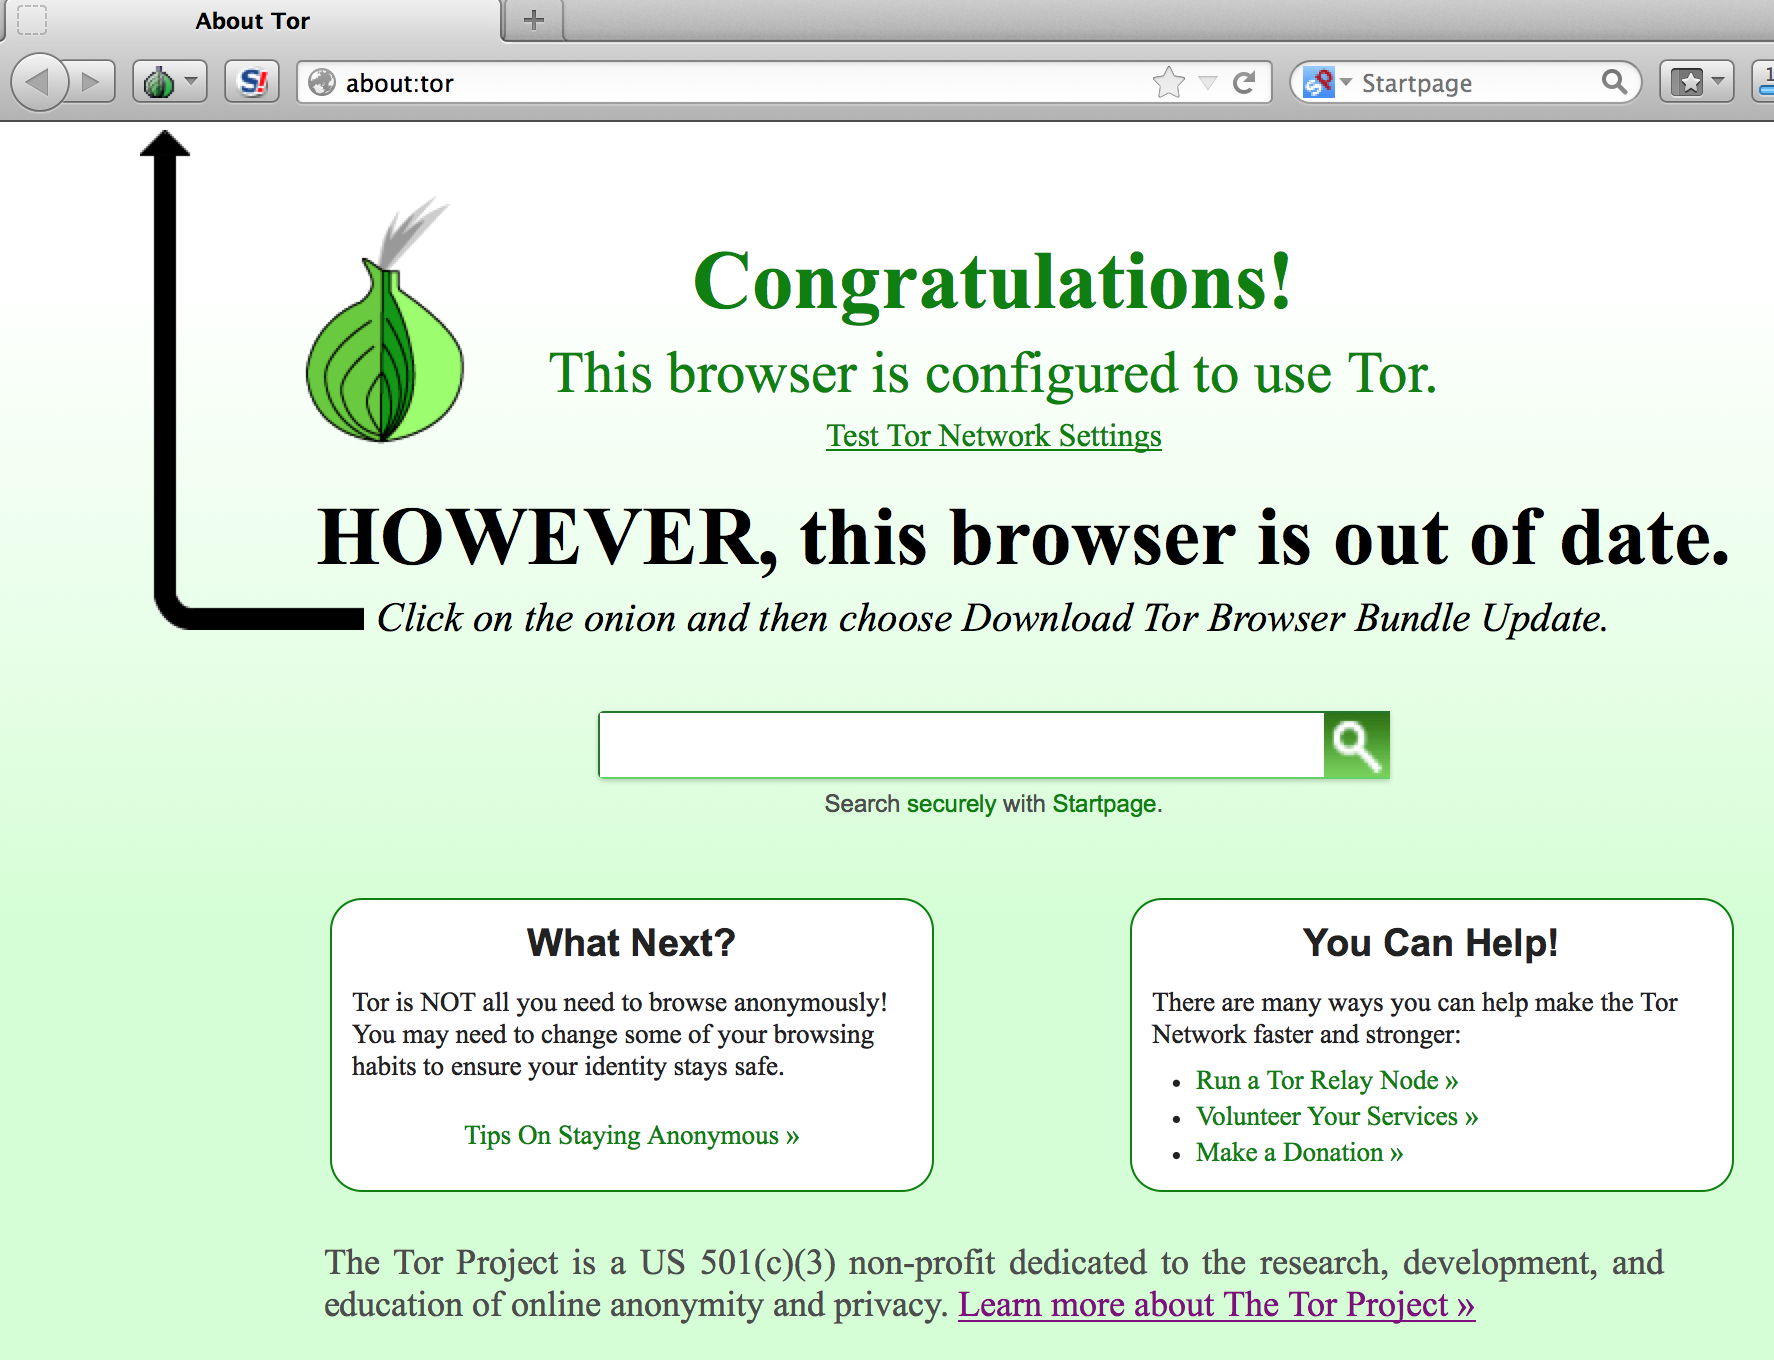 Darknet onion search hudra tor browser home page gidra